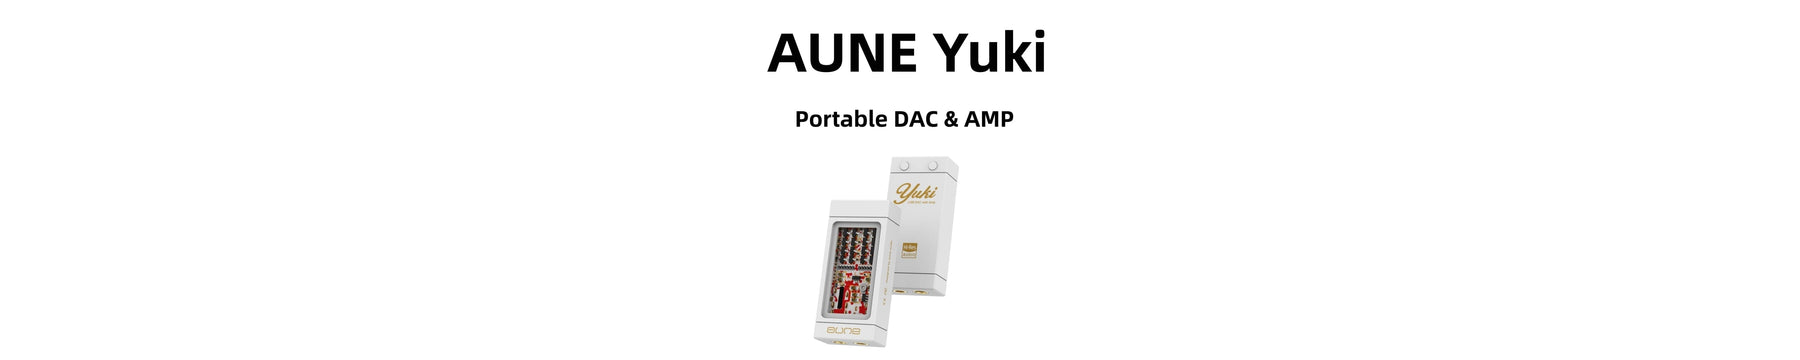 Aune Yuki Premium Portable DAC/AMP With Dual CS43198 DAC & Discrete Heapdhone Amp Section